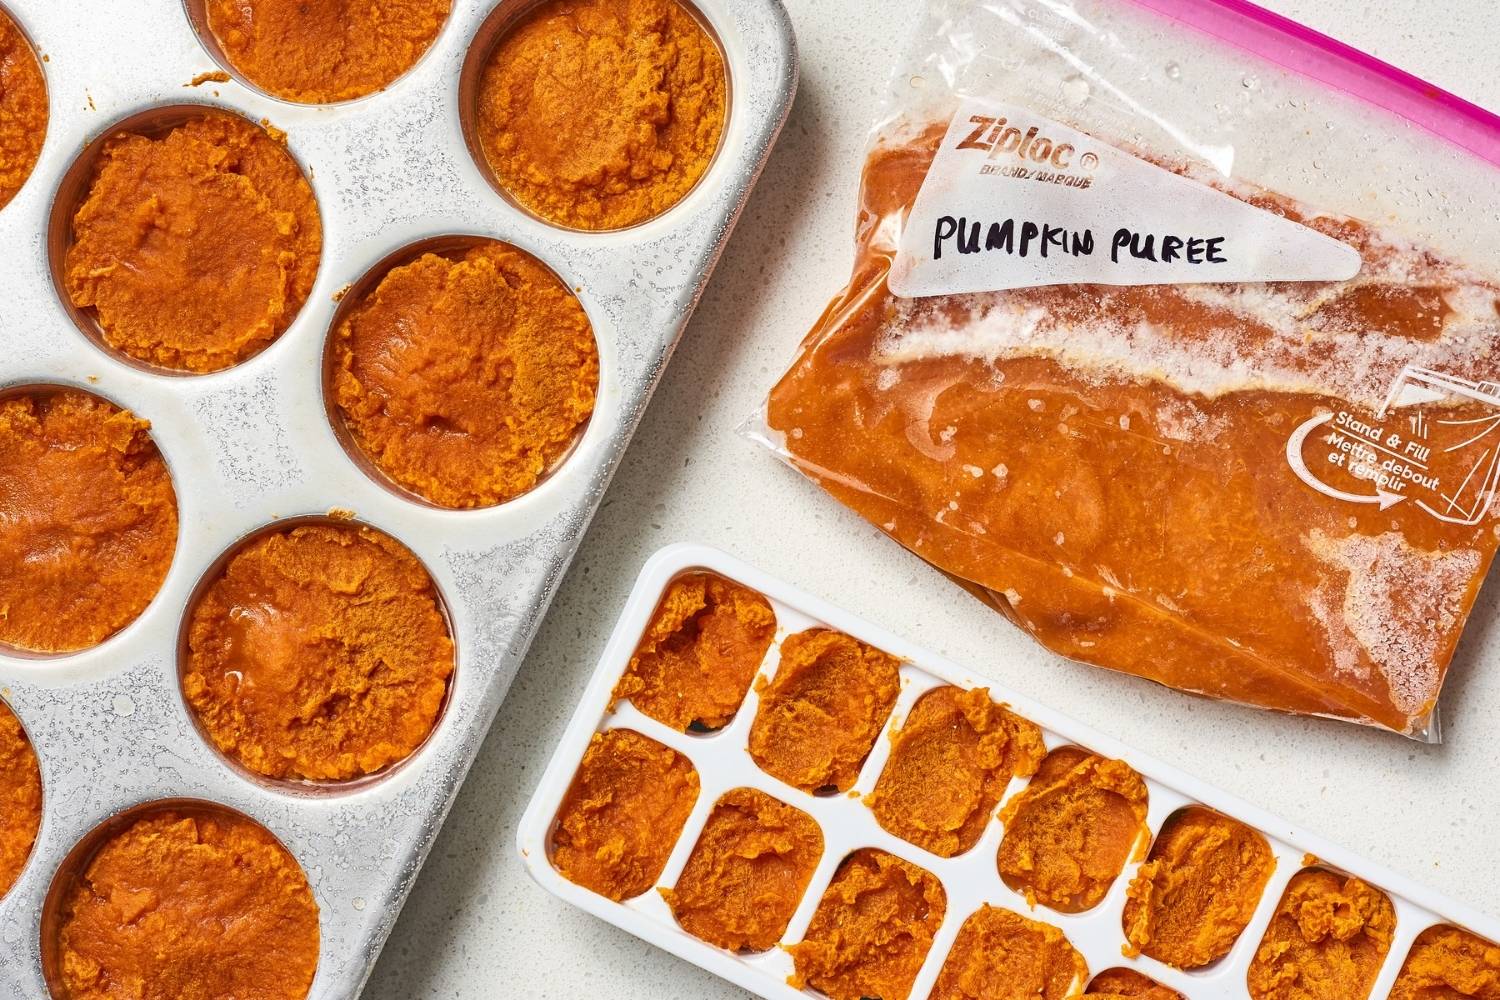 How To Store Pumpkin Puree